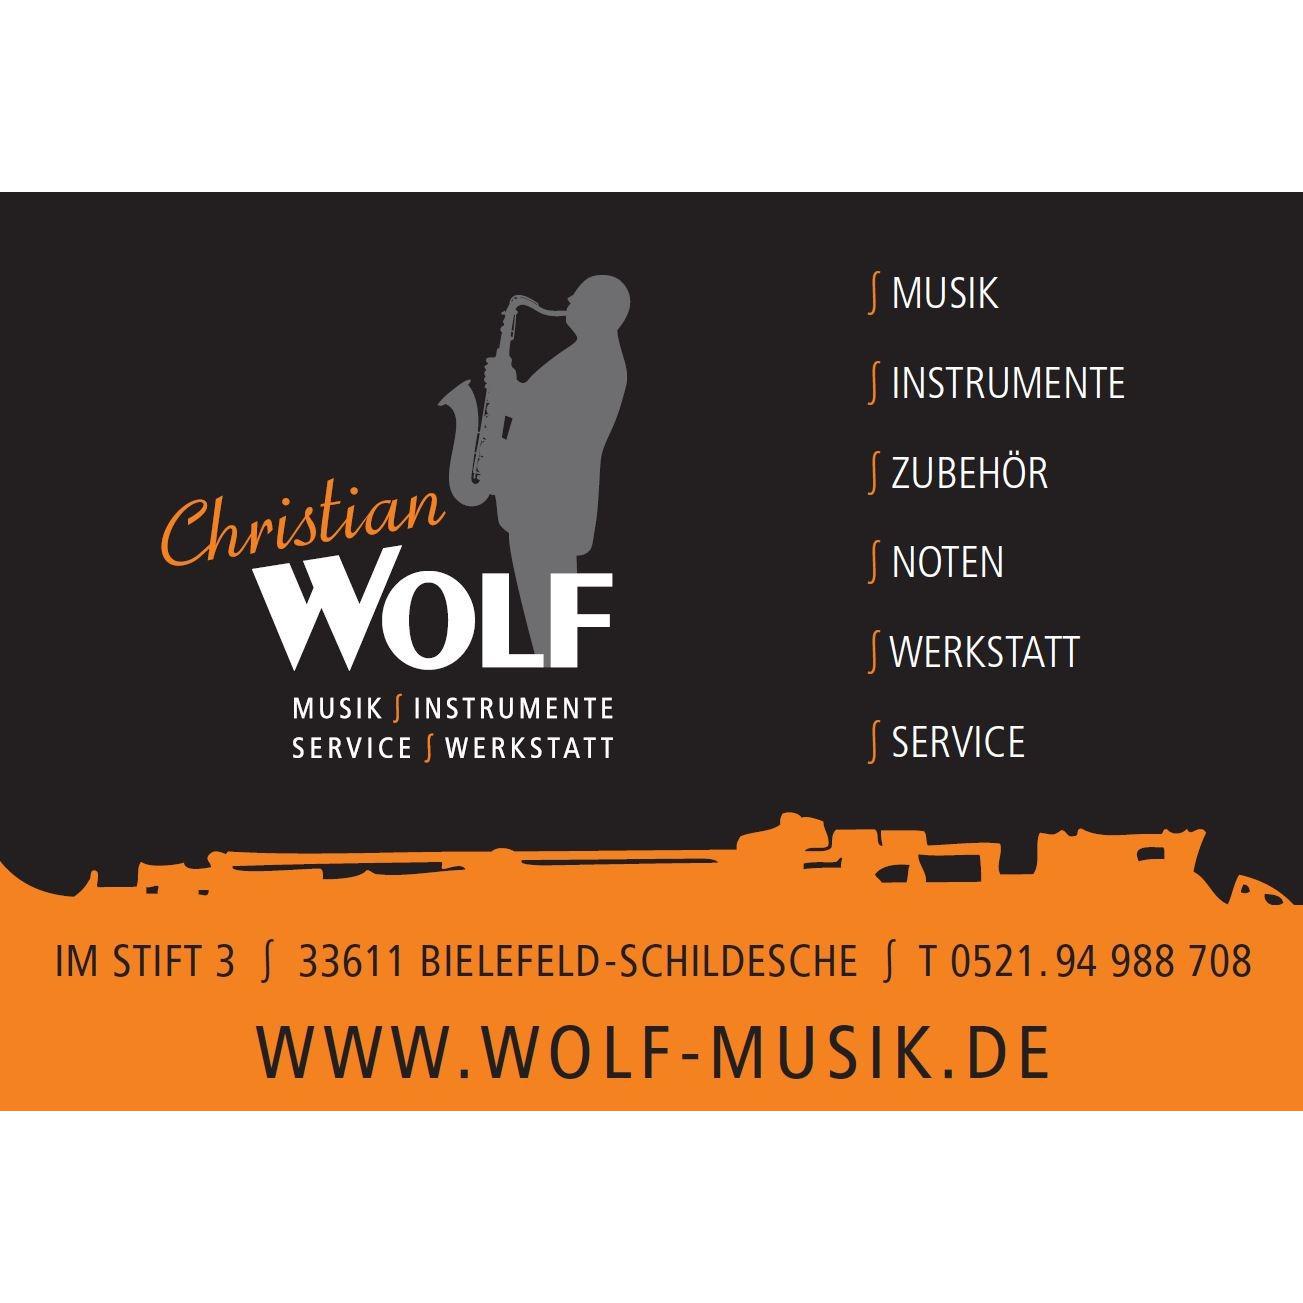 Christian Wolf, Musikinstrumente & Service in Bielefeld - Logo